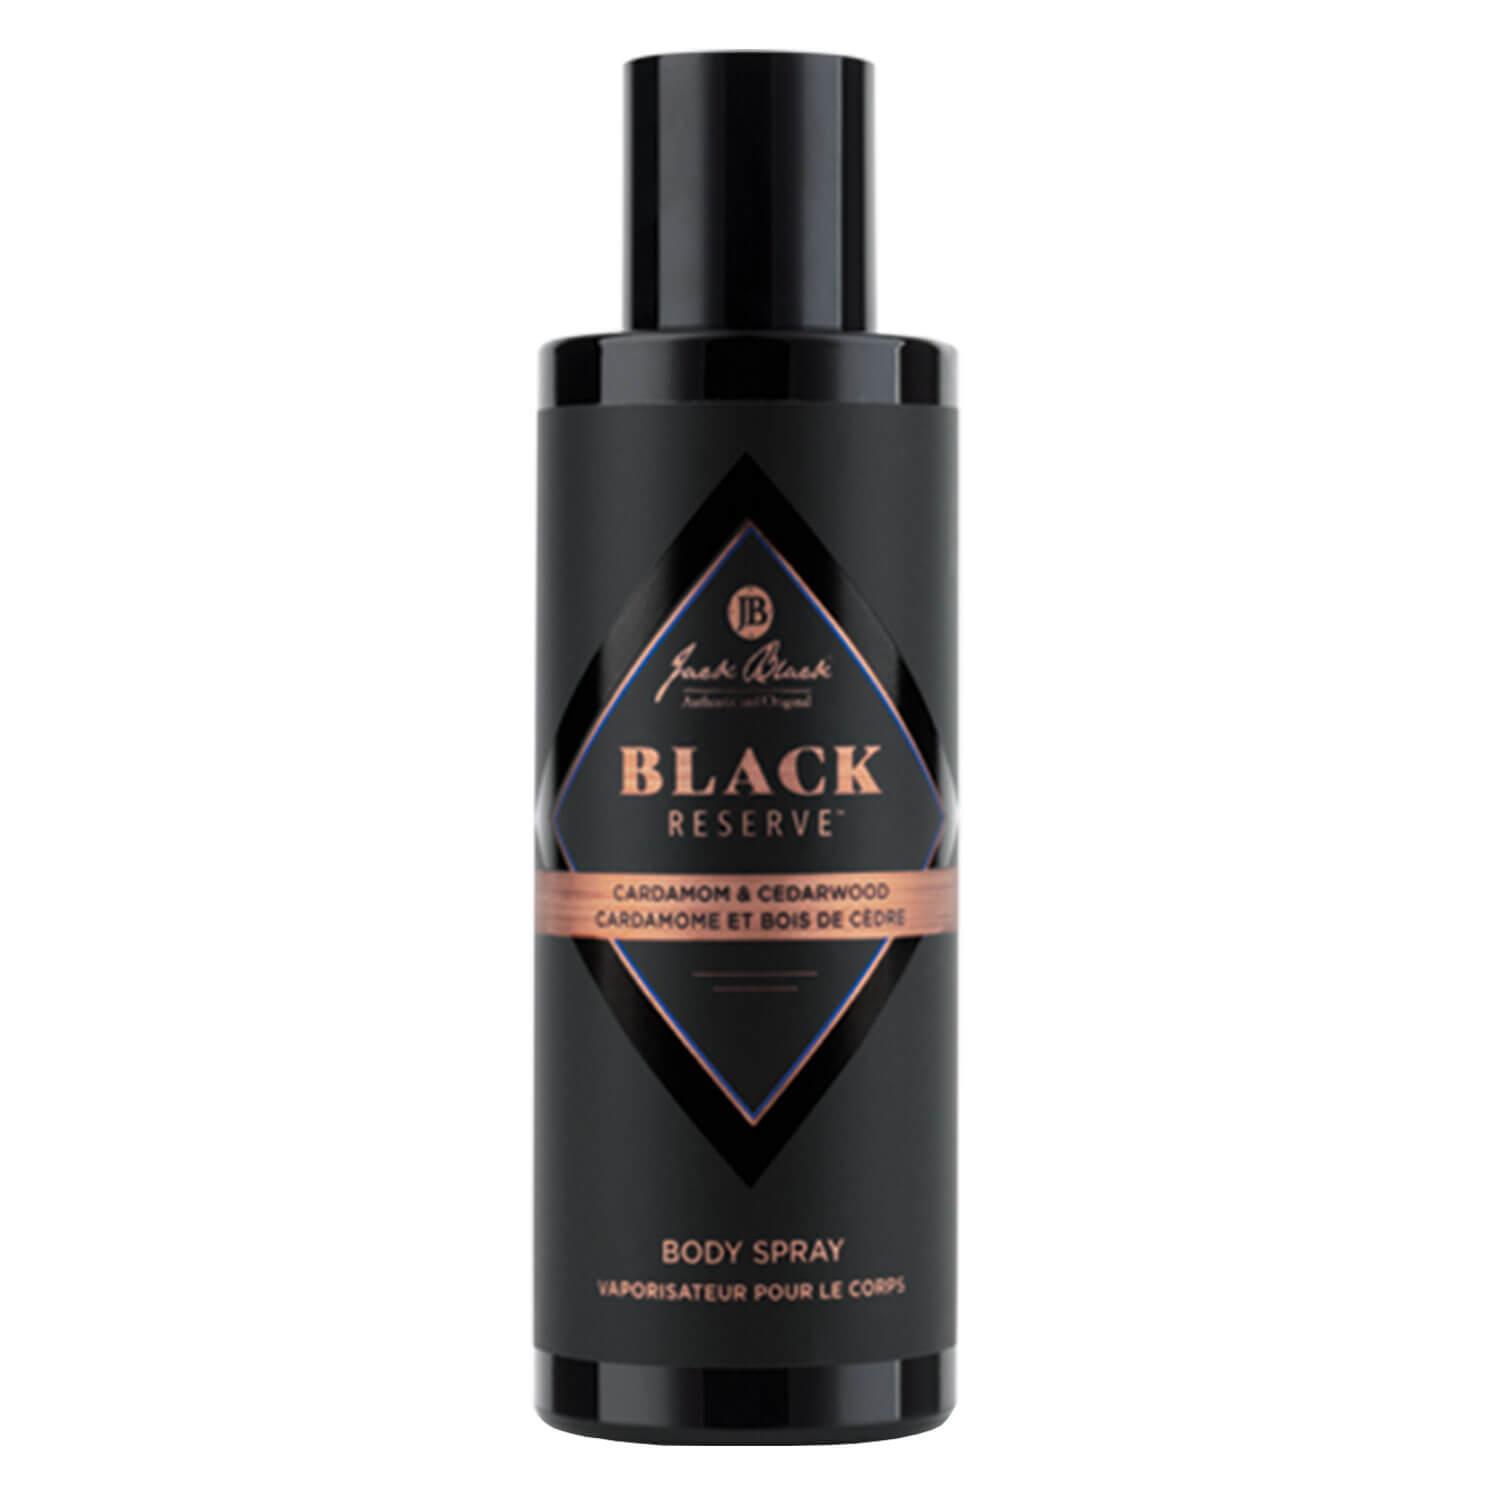 Black Reserve - Body Spray